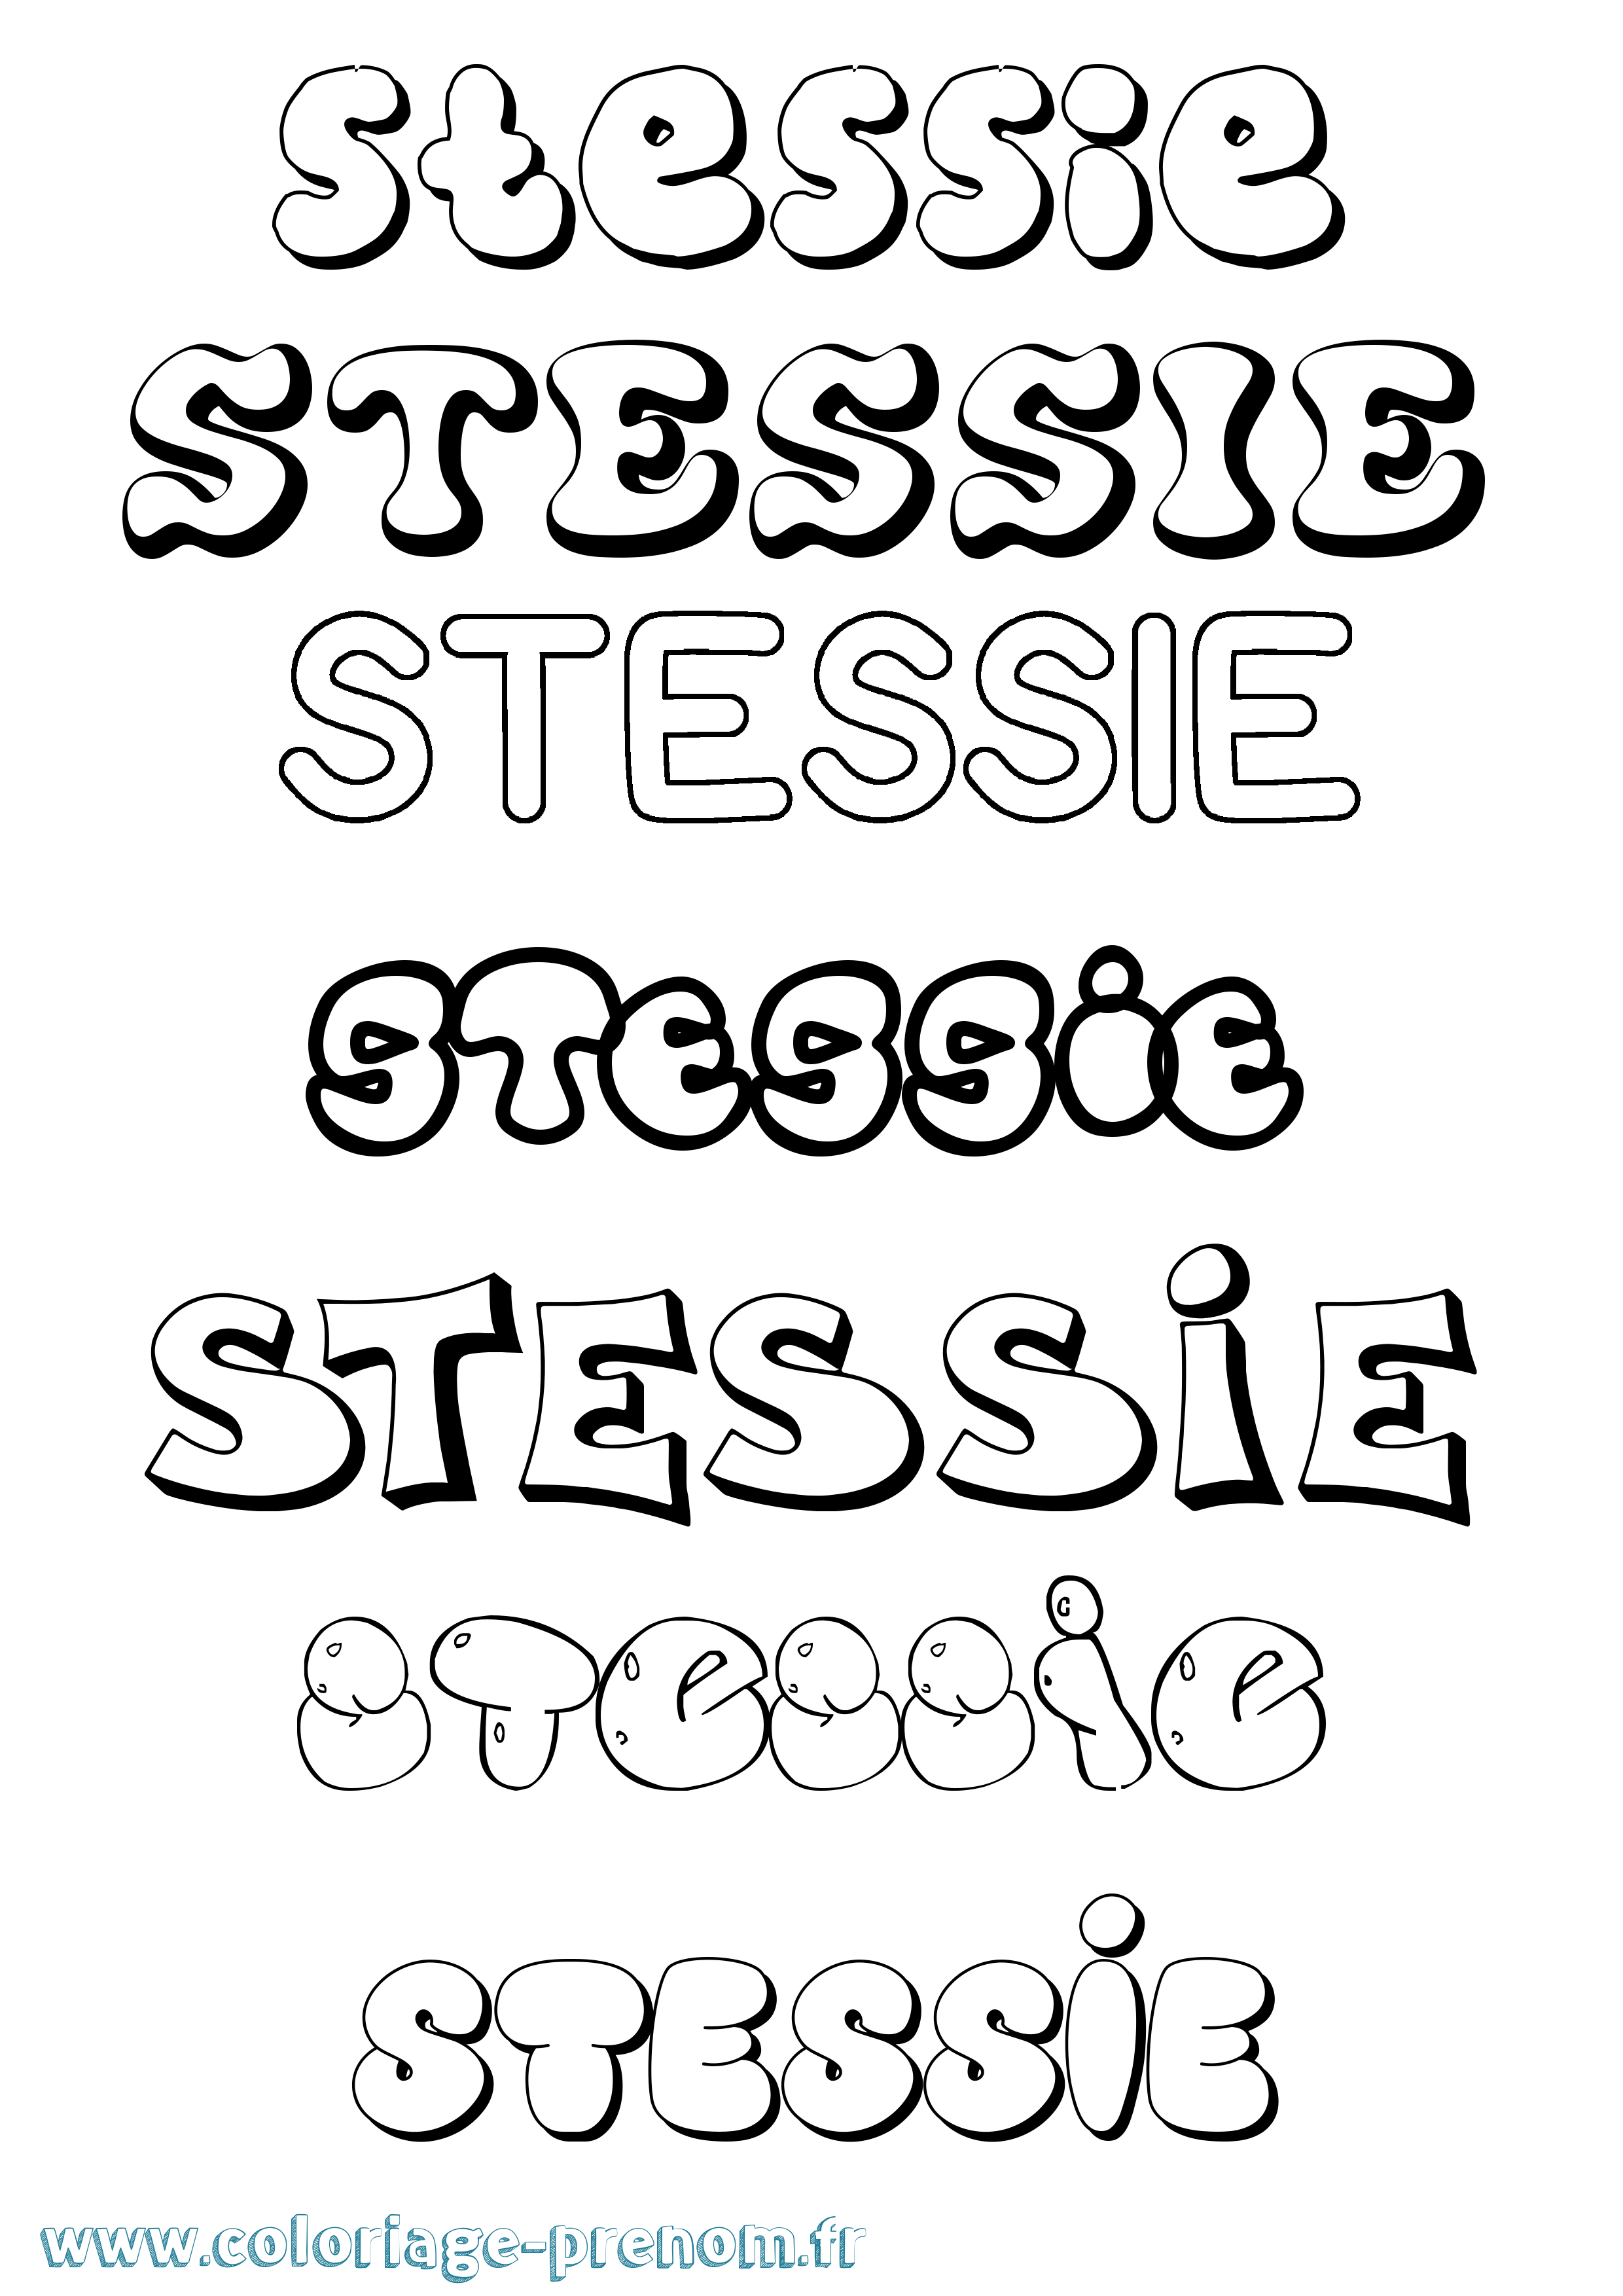 Coloriage prénom Stessie Bubble